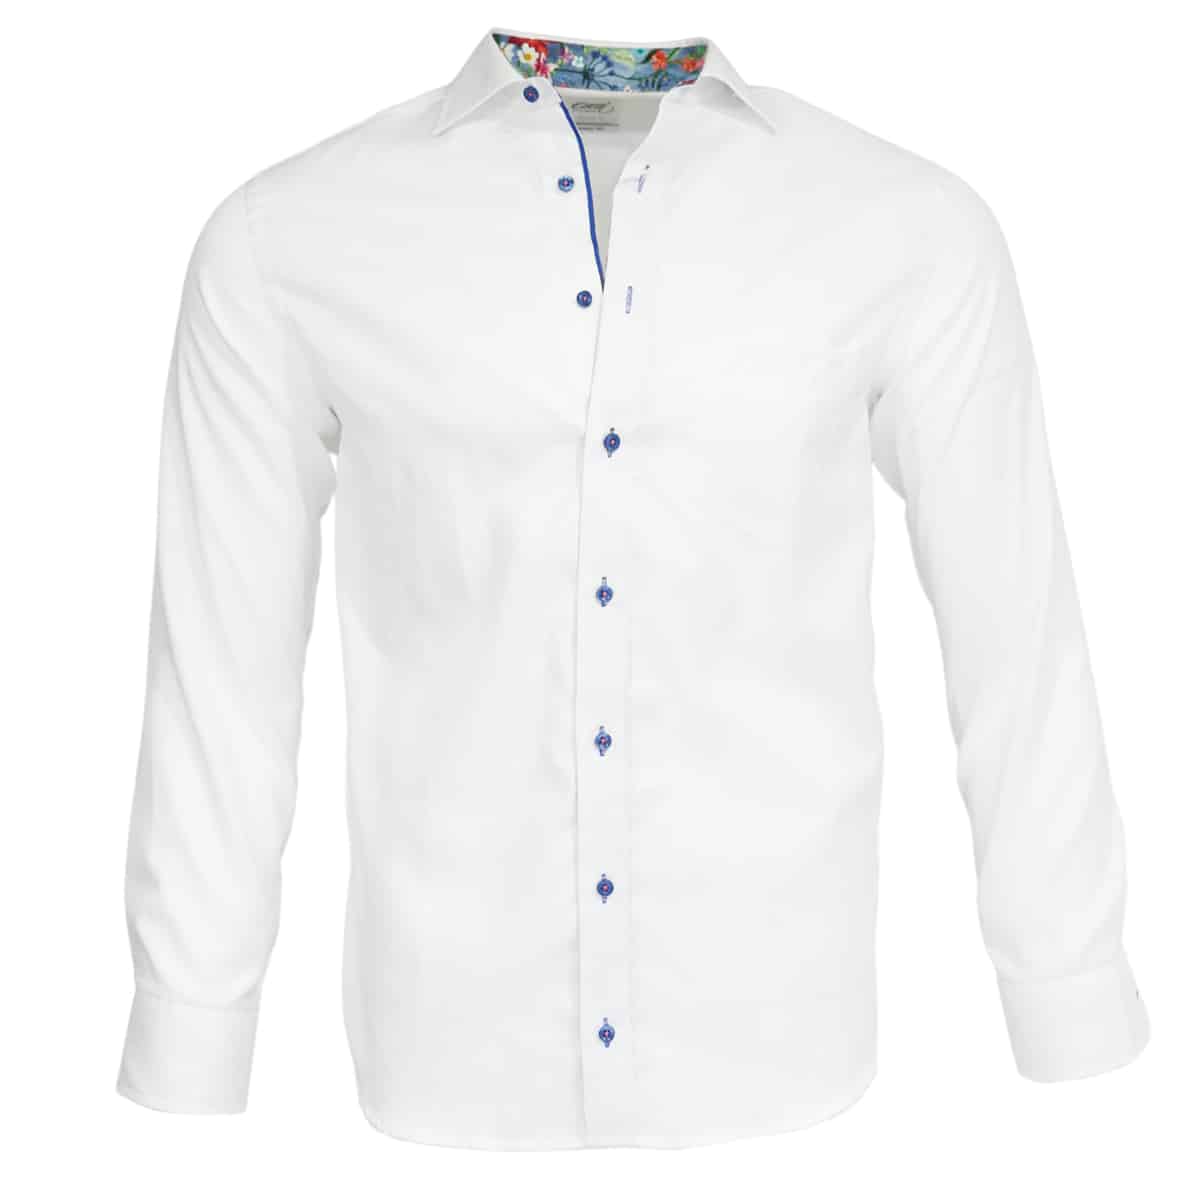 OSCAR OF SWEDEN WHITE SHIRT WITH FLOWER DETAIL IN COLLAR | Menswear Online